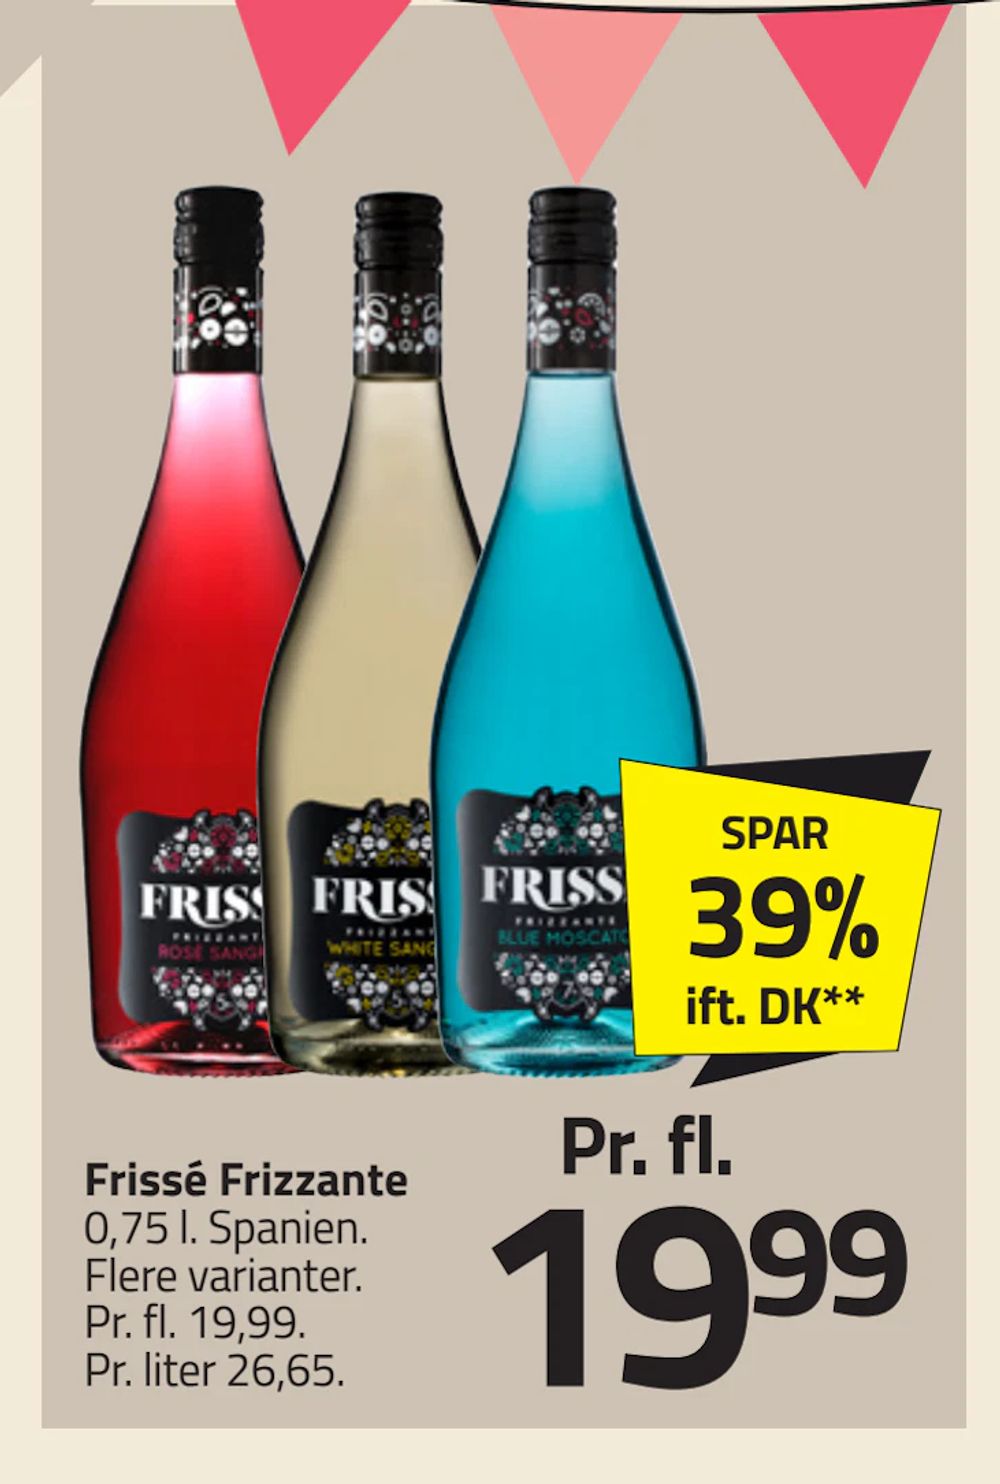 Tilbud på Frissé Frizzante fra Fleggaard til 19,99 kr.